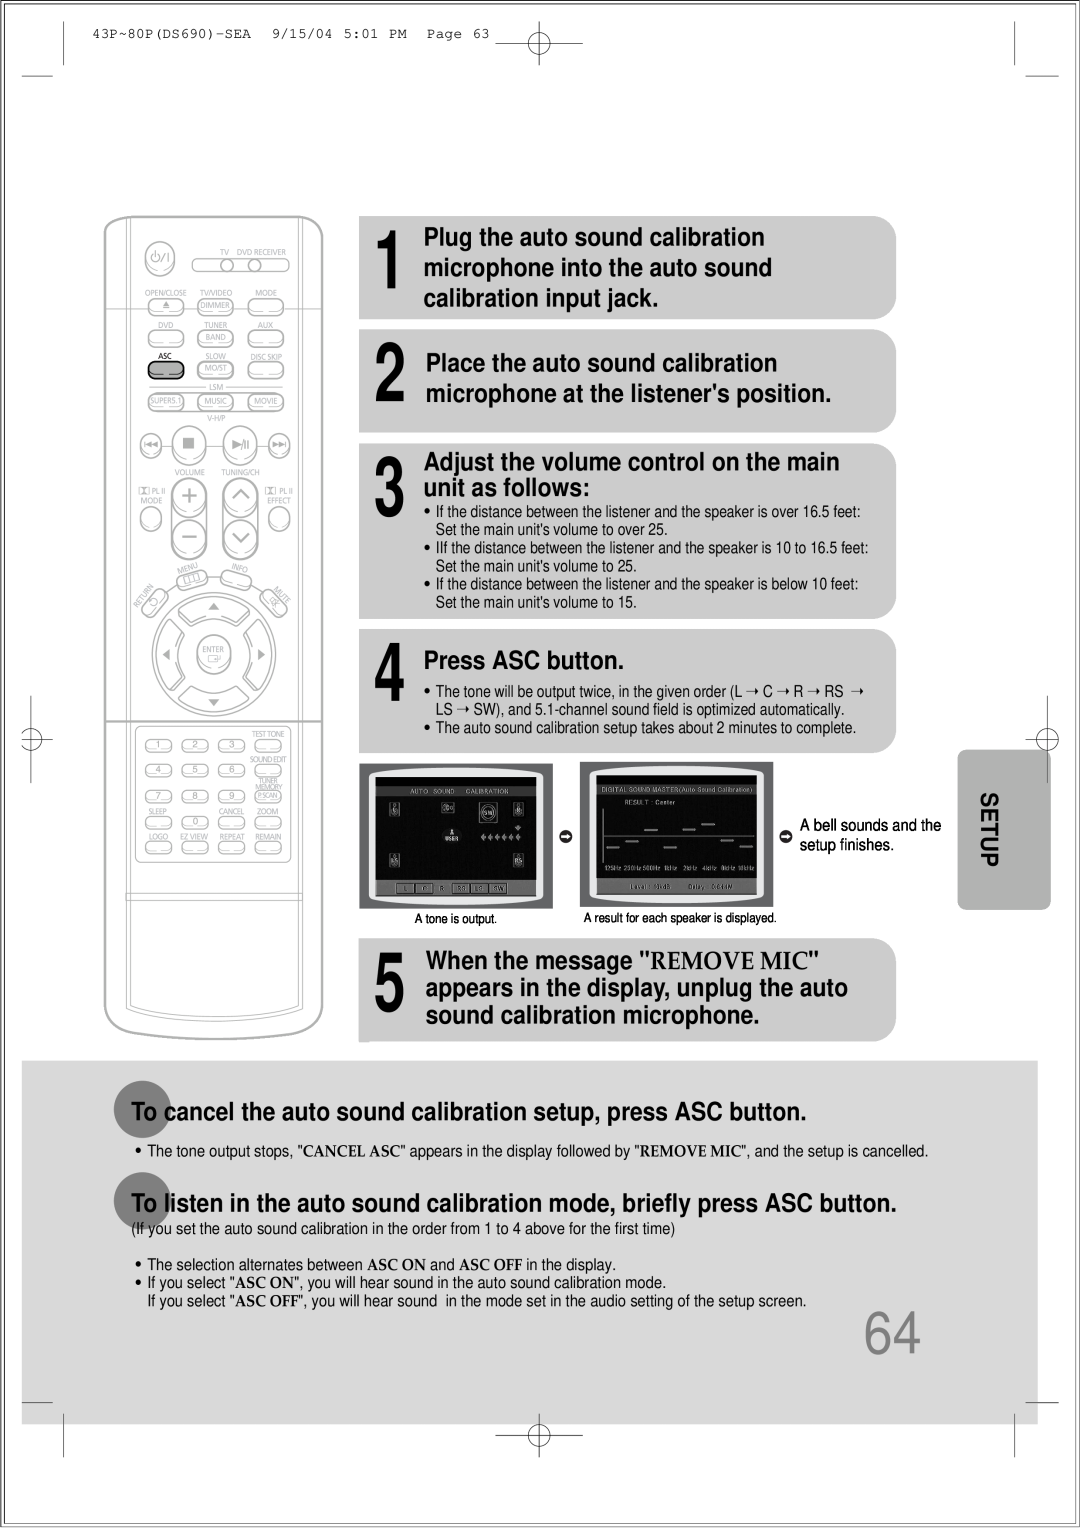 Samsung HT-DS690 Plug the auto sound calibration, Adjust the volume control on the main, unit as follows, Press ASC button 